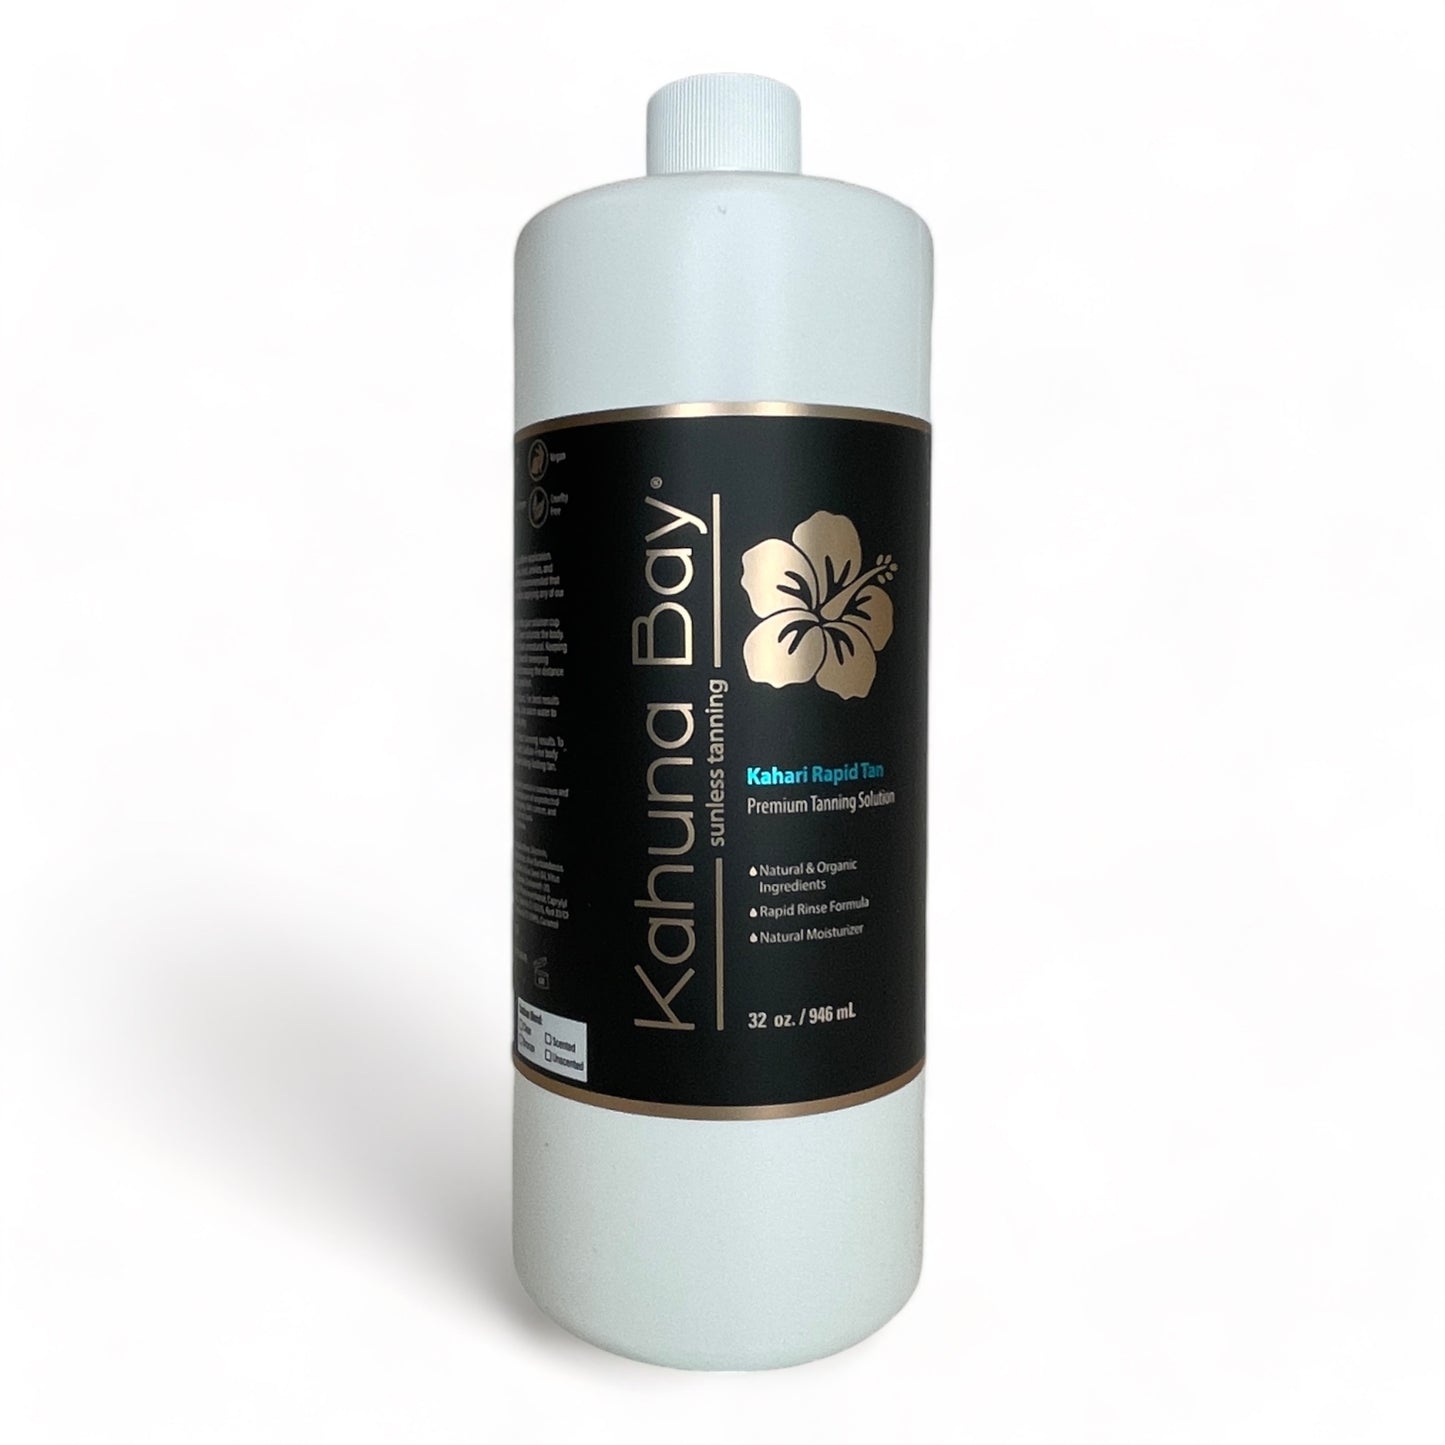 Kahuna Bay Spray Tan Solution, Kahari Rapid Tan - Fast Developing,, Silky Smooth Skin